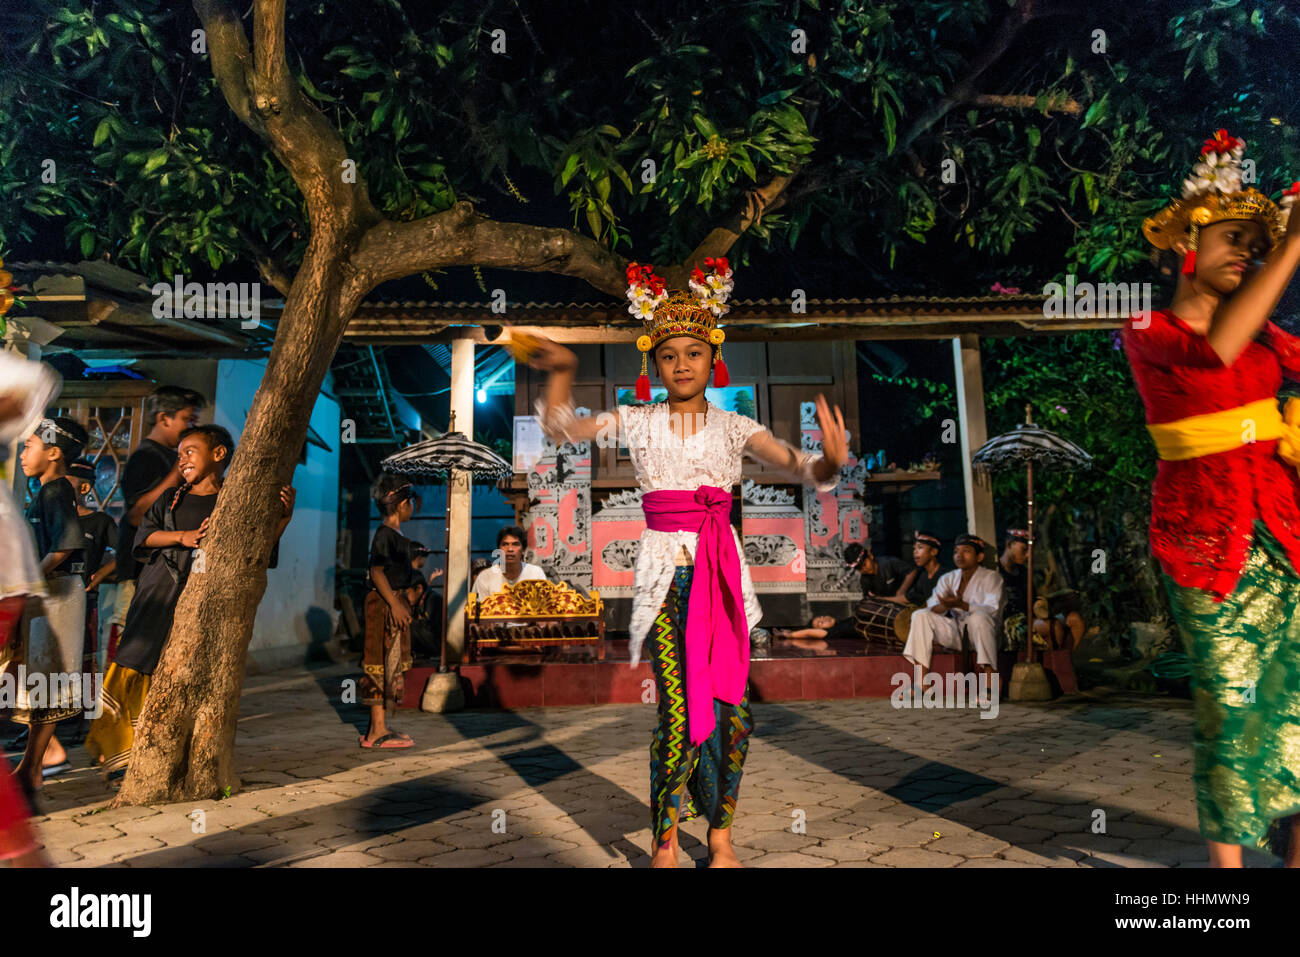 Balinese girl dancing, traditional dance and clothing, Kecamatan Buleleng, Bali, Indonesia Stock Photo